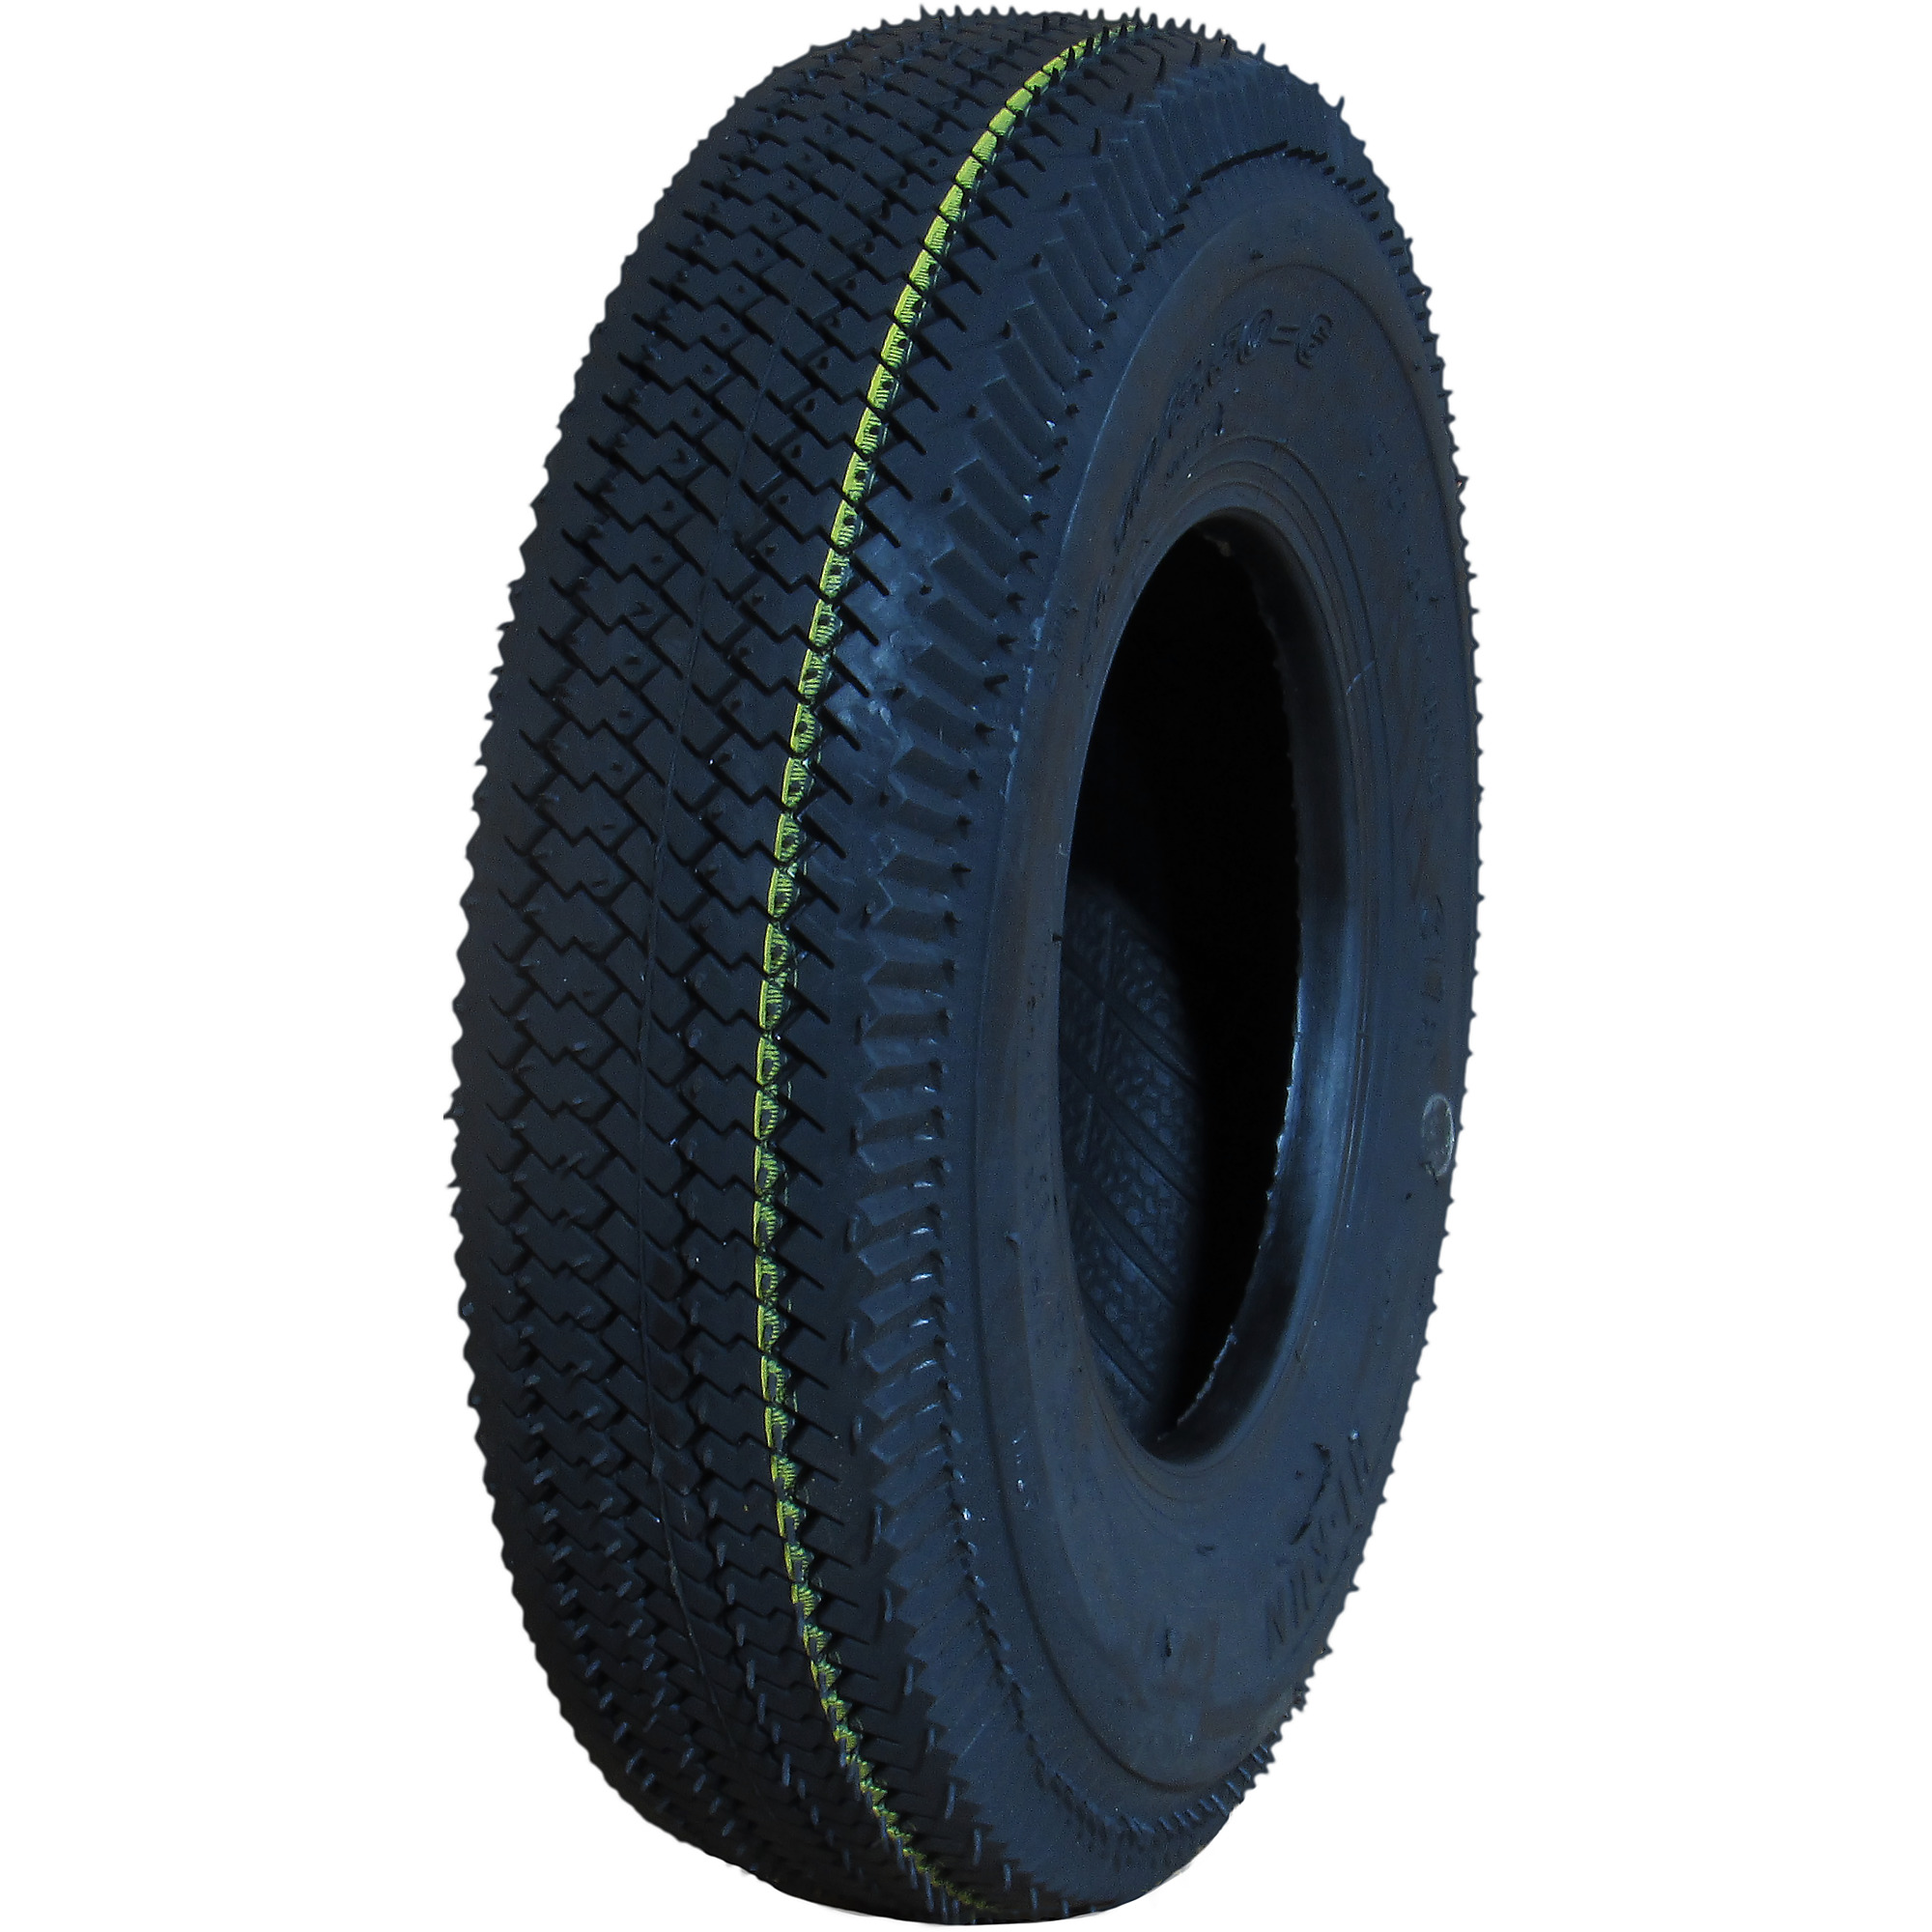 HI-RUN, Wheel Barrow Tire, 4 ply, Sawtooth, Tire Size 4.10/3.50-6 Load Range Rating B, Model CT1012